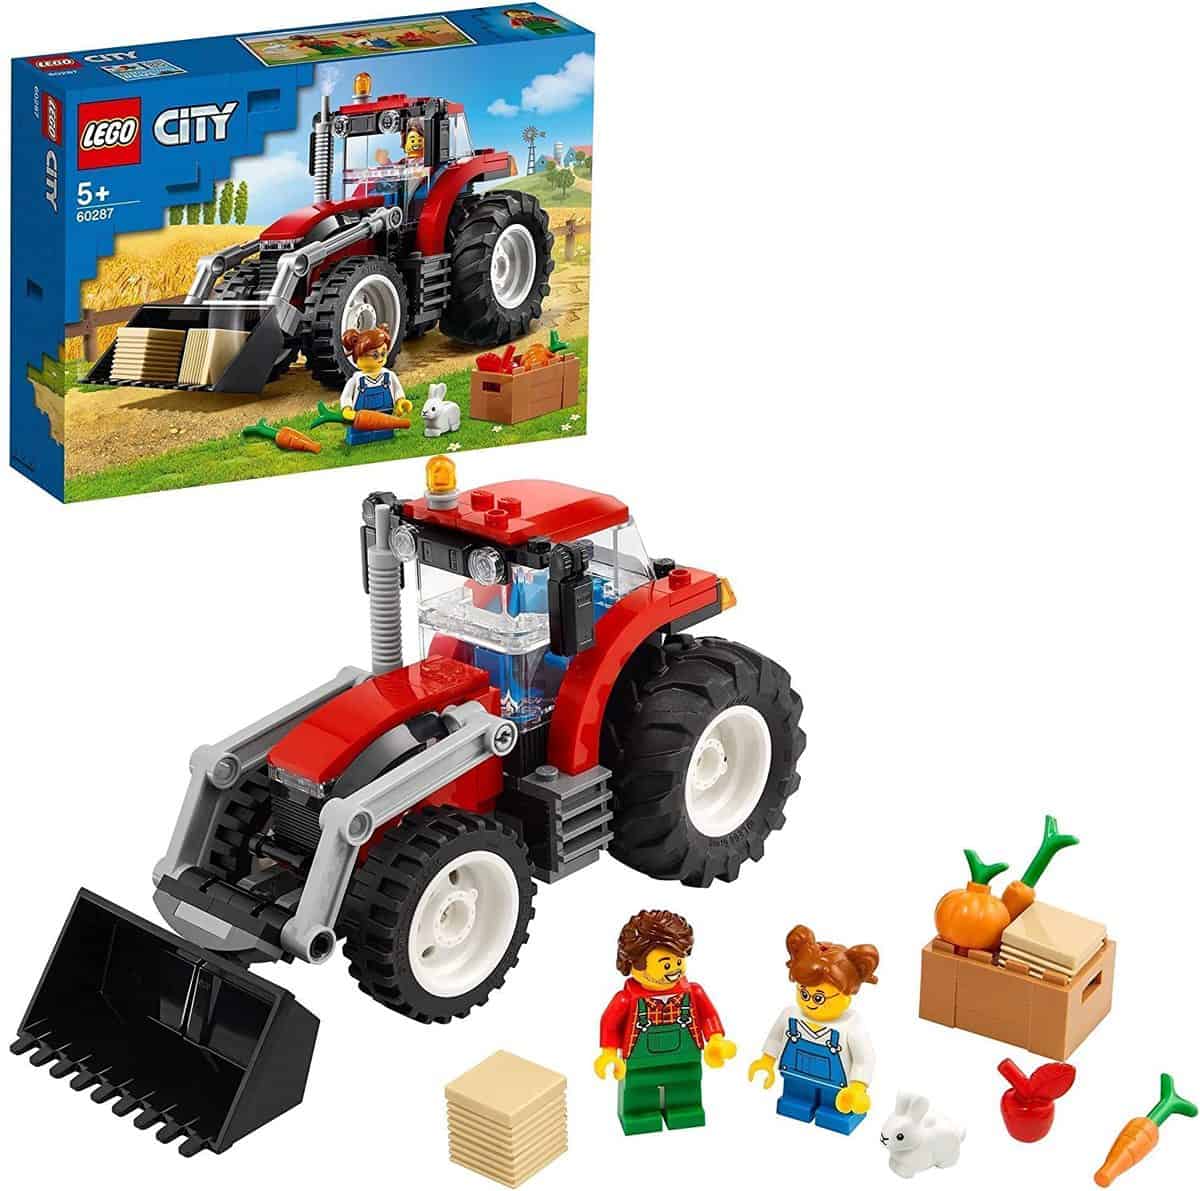 LEGO City - Traktor Bauernhofset (60287) - für 13,19 € inkl. Versand statt 19,88 €